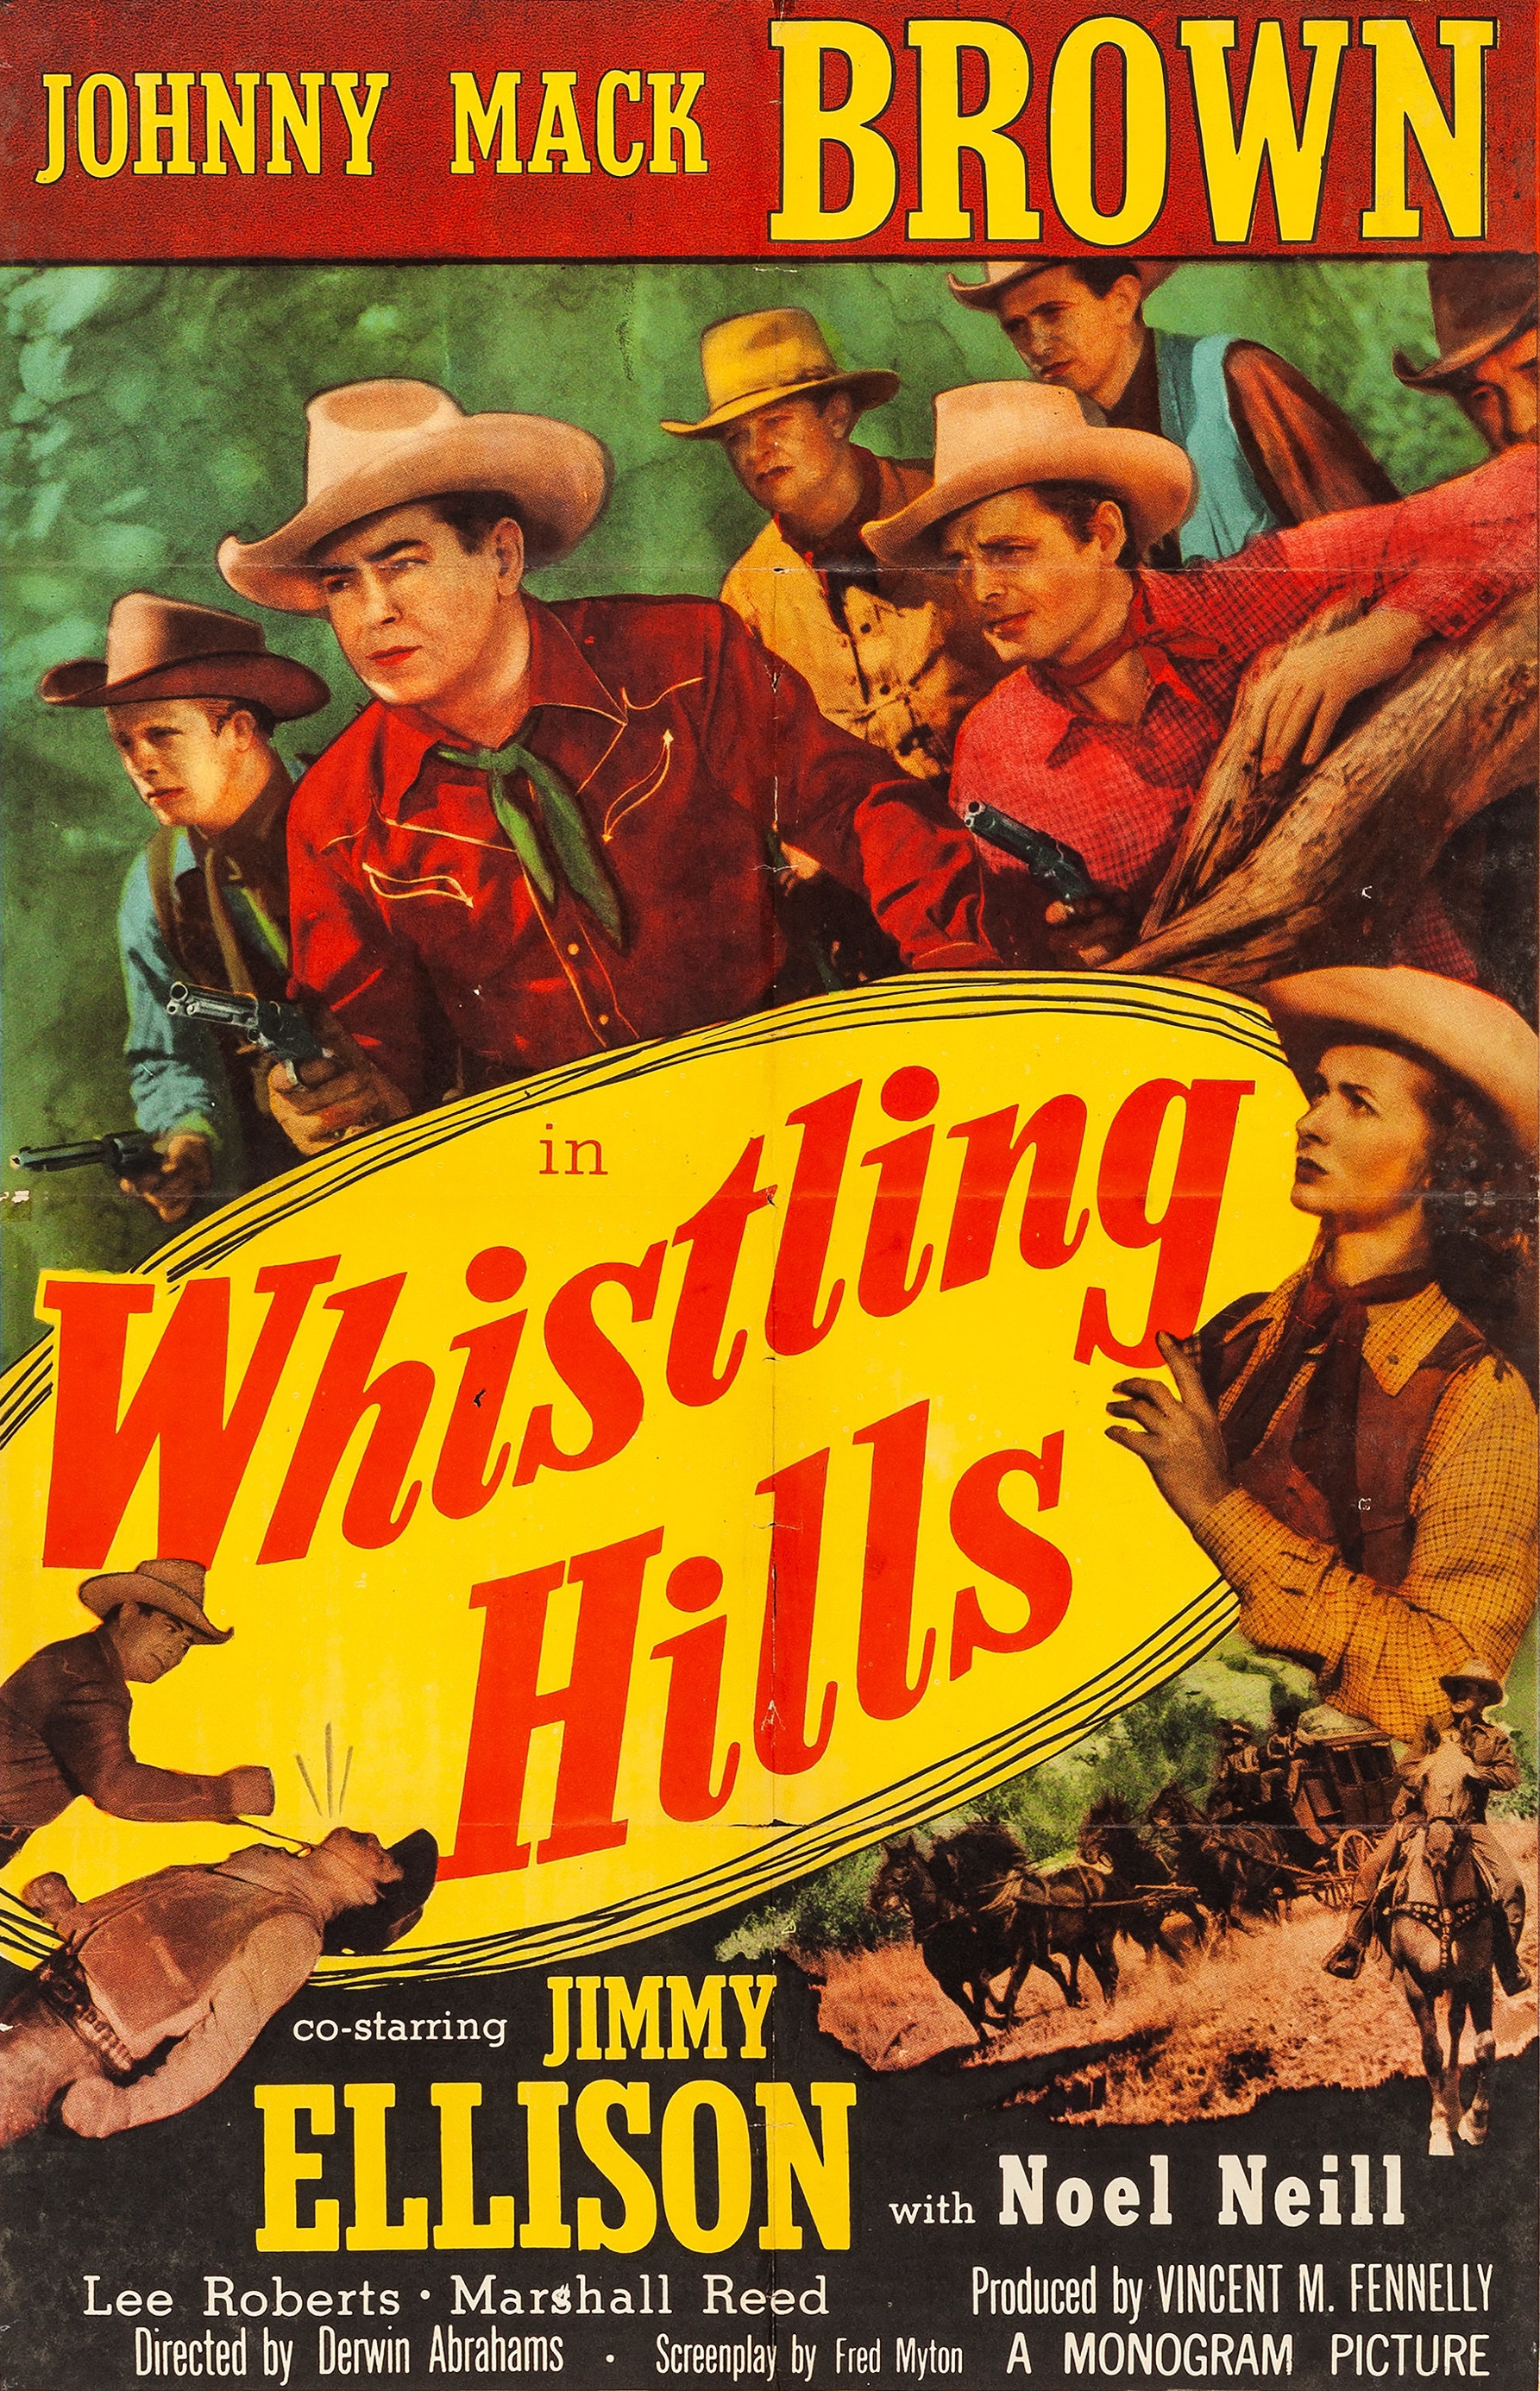 Whistling Hills